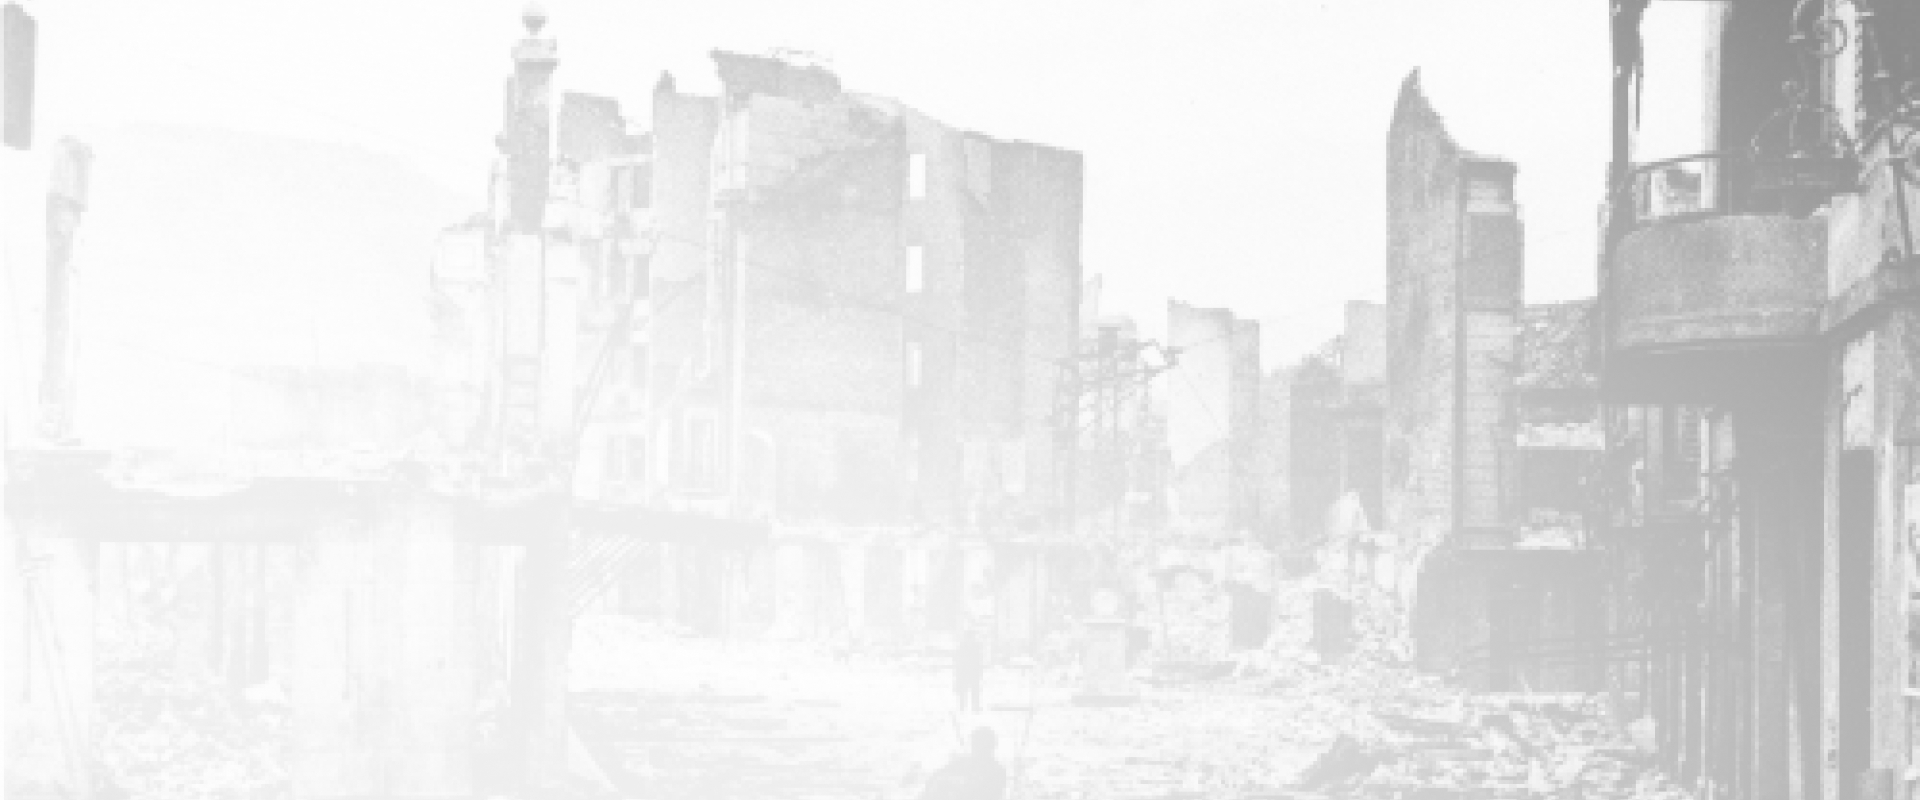 Image du bombardement de Gernika